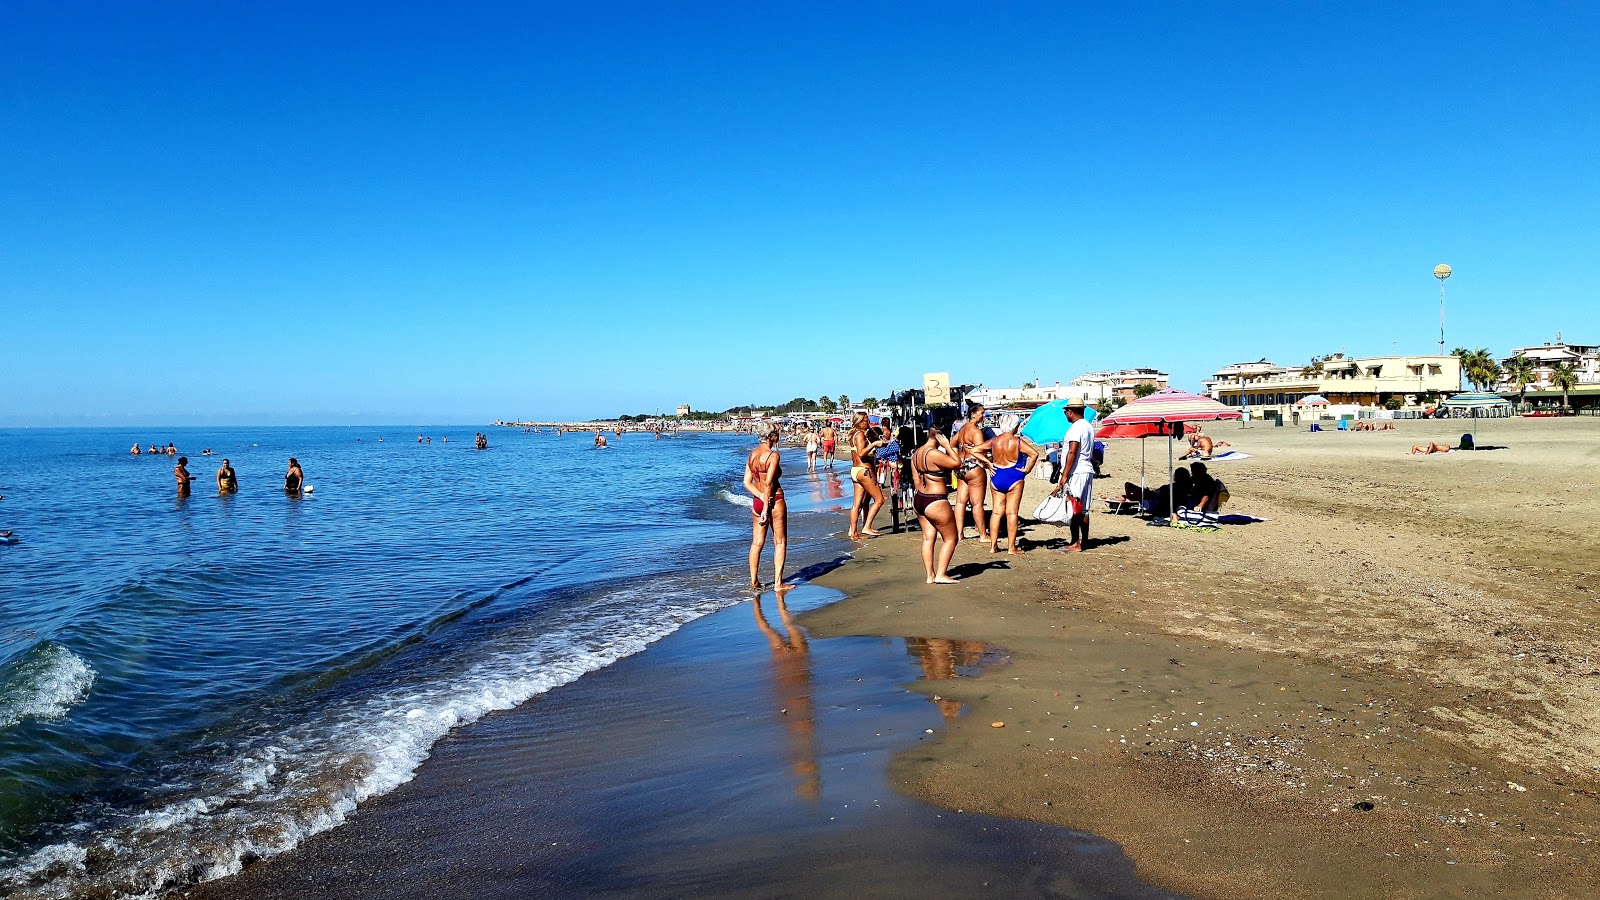 Spiaggia Attrezzata'in fotoğrafı plaj tatil beldesi alanı